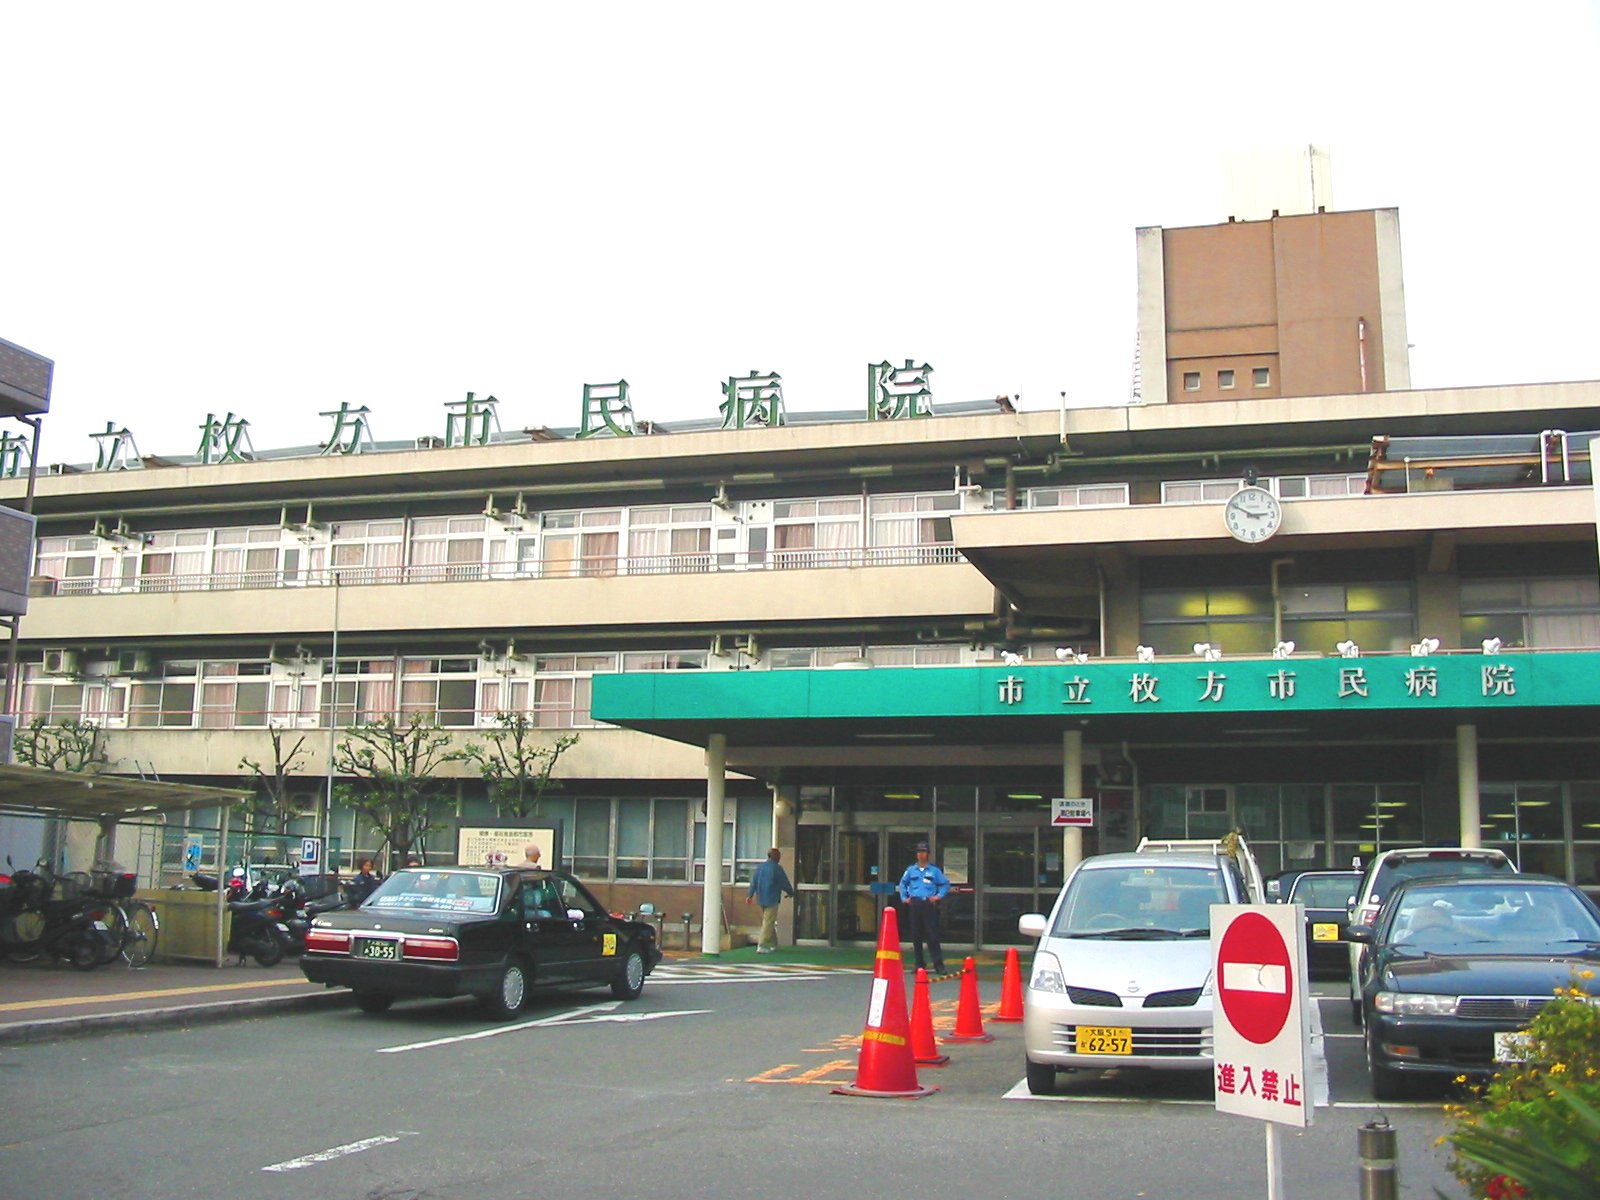 Hospital. 535m to Hirakata Municipal Hospital (Hospital)